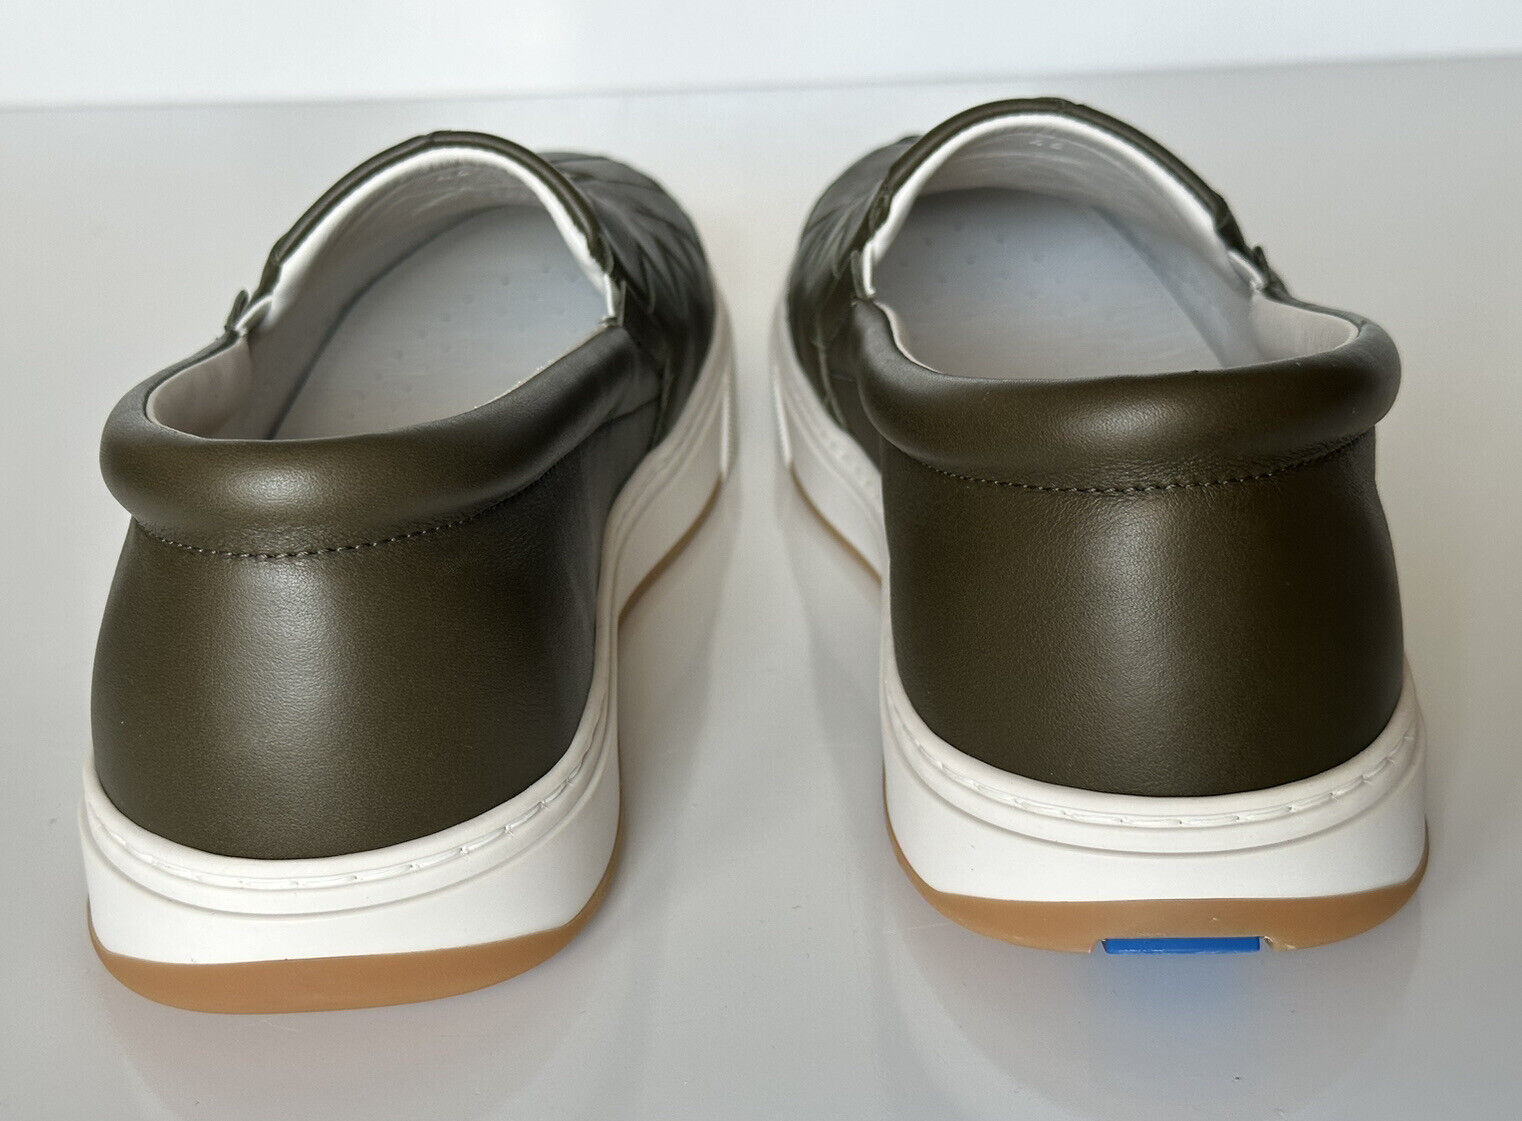 NIB $760 Bottega Veneta Rubber Sole Calf Leather Kaki Shoes 13 608751